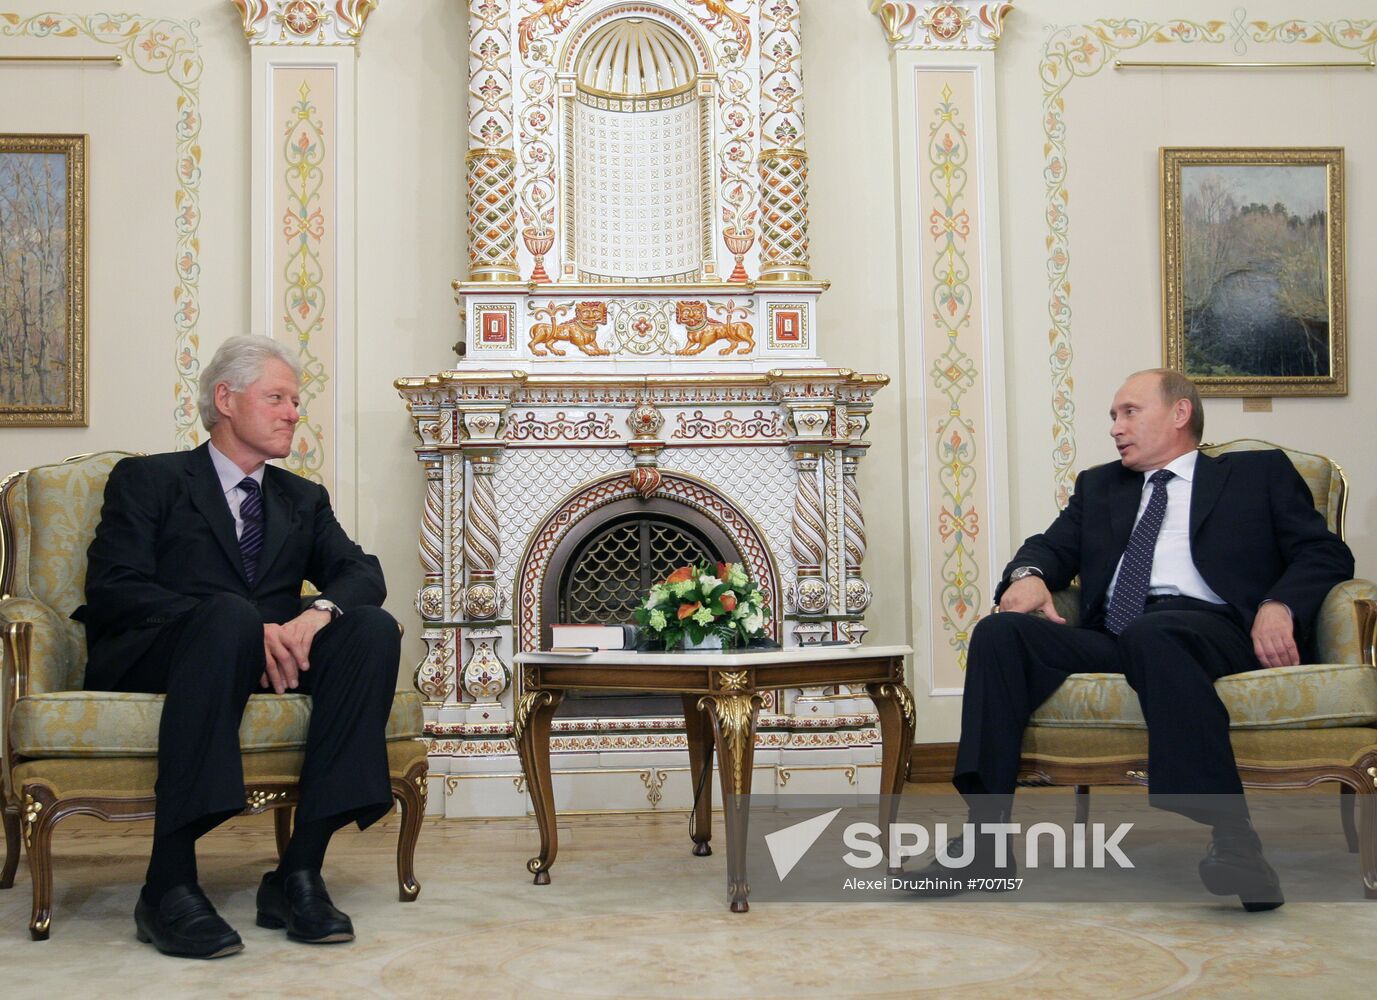 Vladimir Putin meets with Bill Clinton